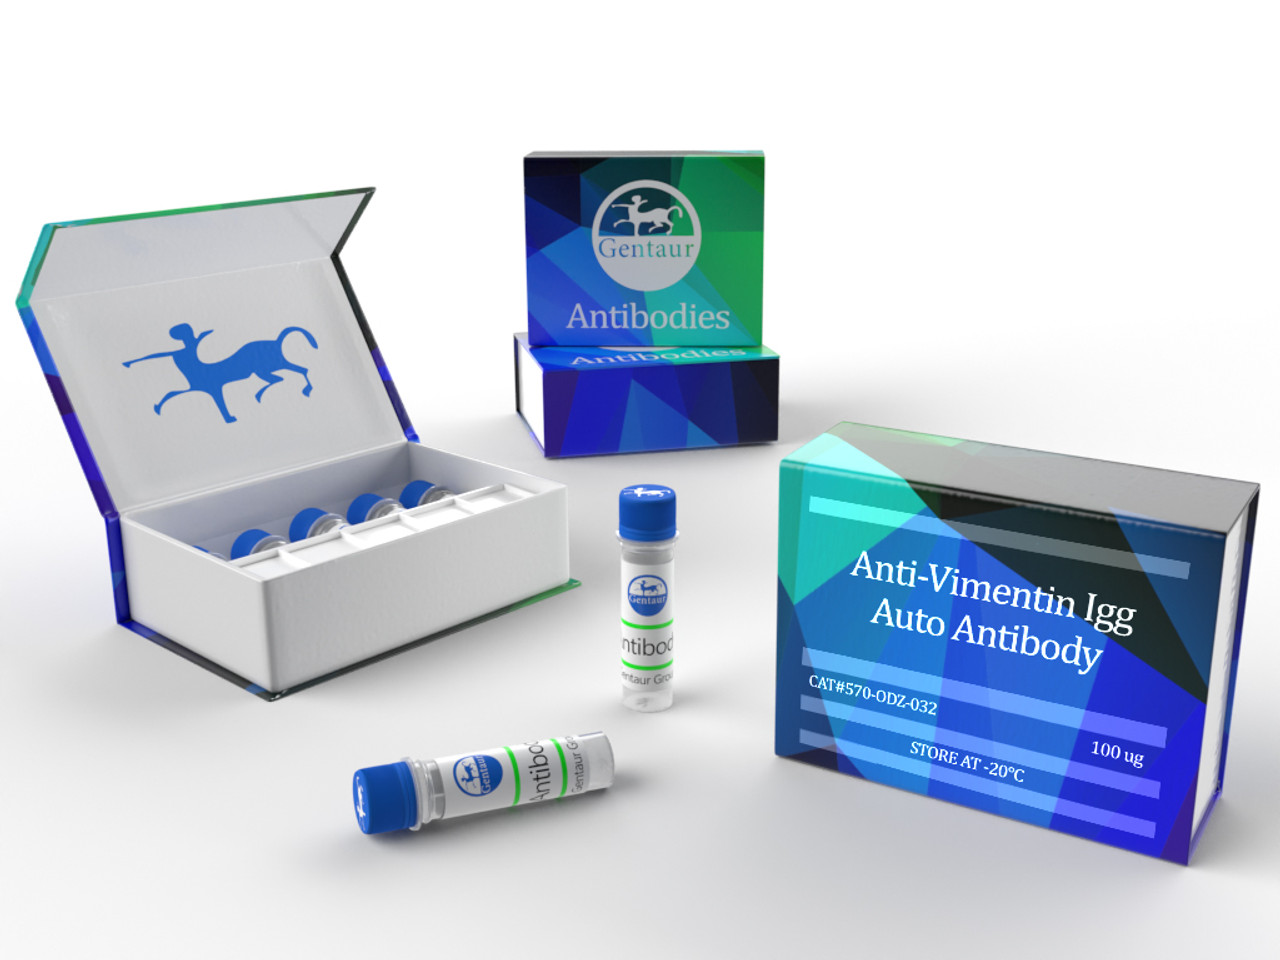 Anti-Vimentin Igg Auto Antibody